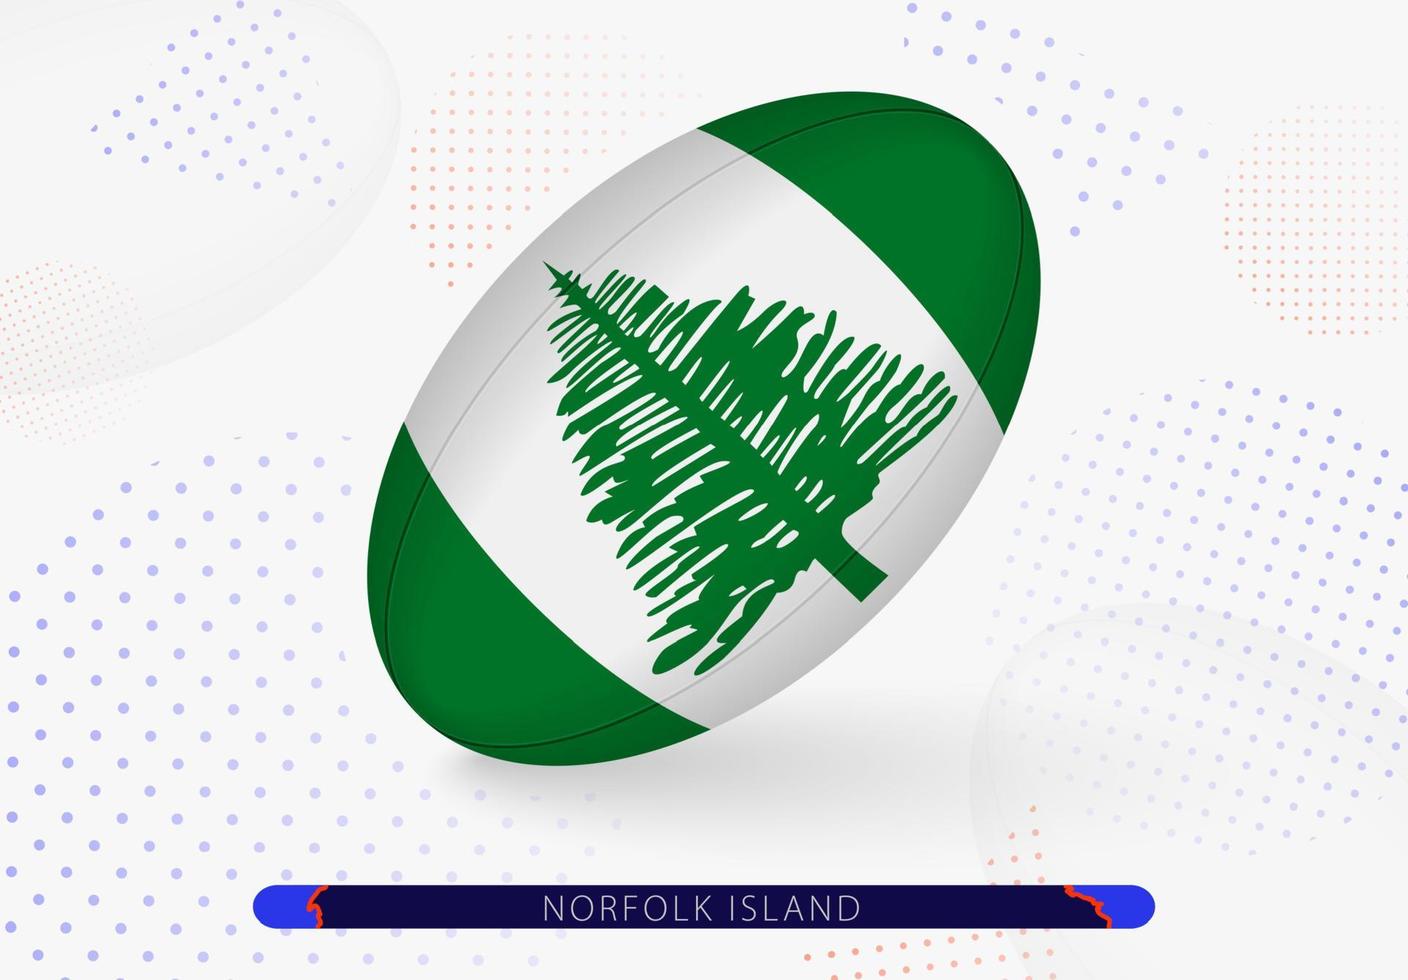 bola de rugby com a bandeira da ilha de norfolk nele. equipamento para time de rugby da ilha de norfolk. vetor